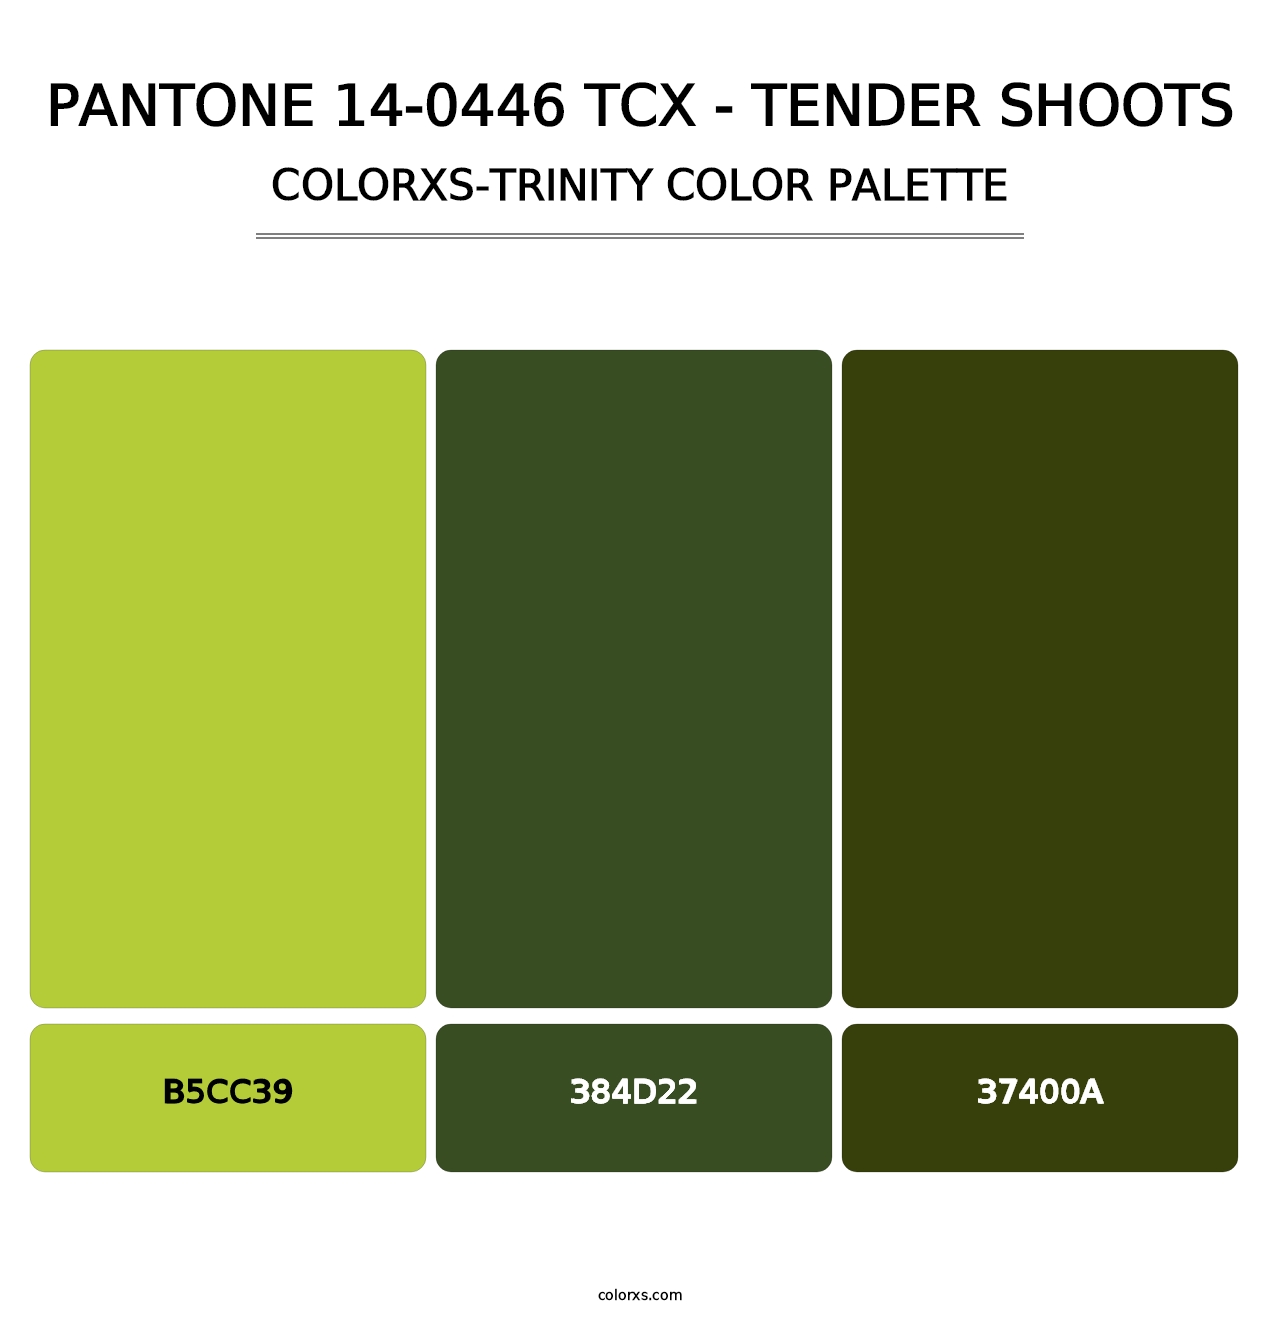 PANTONE 14-0446 TCX - Tender Shoots - Colorxs Trinity Palette